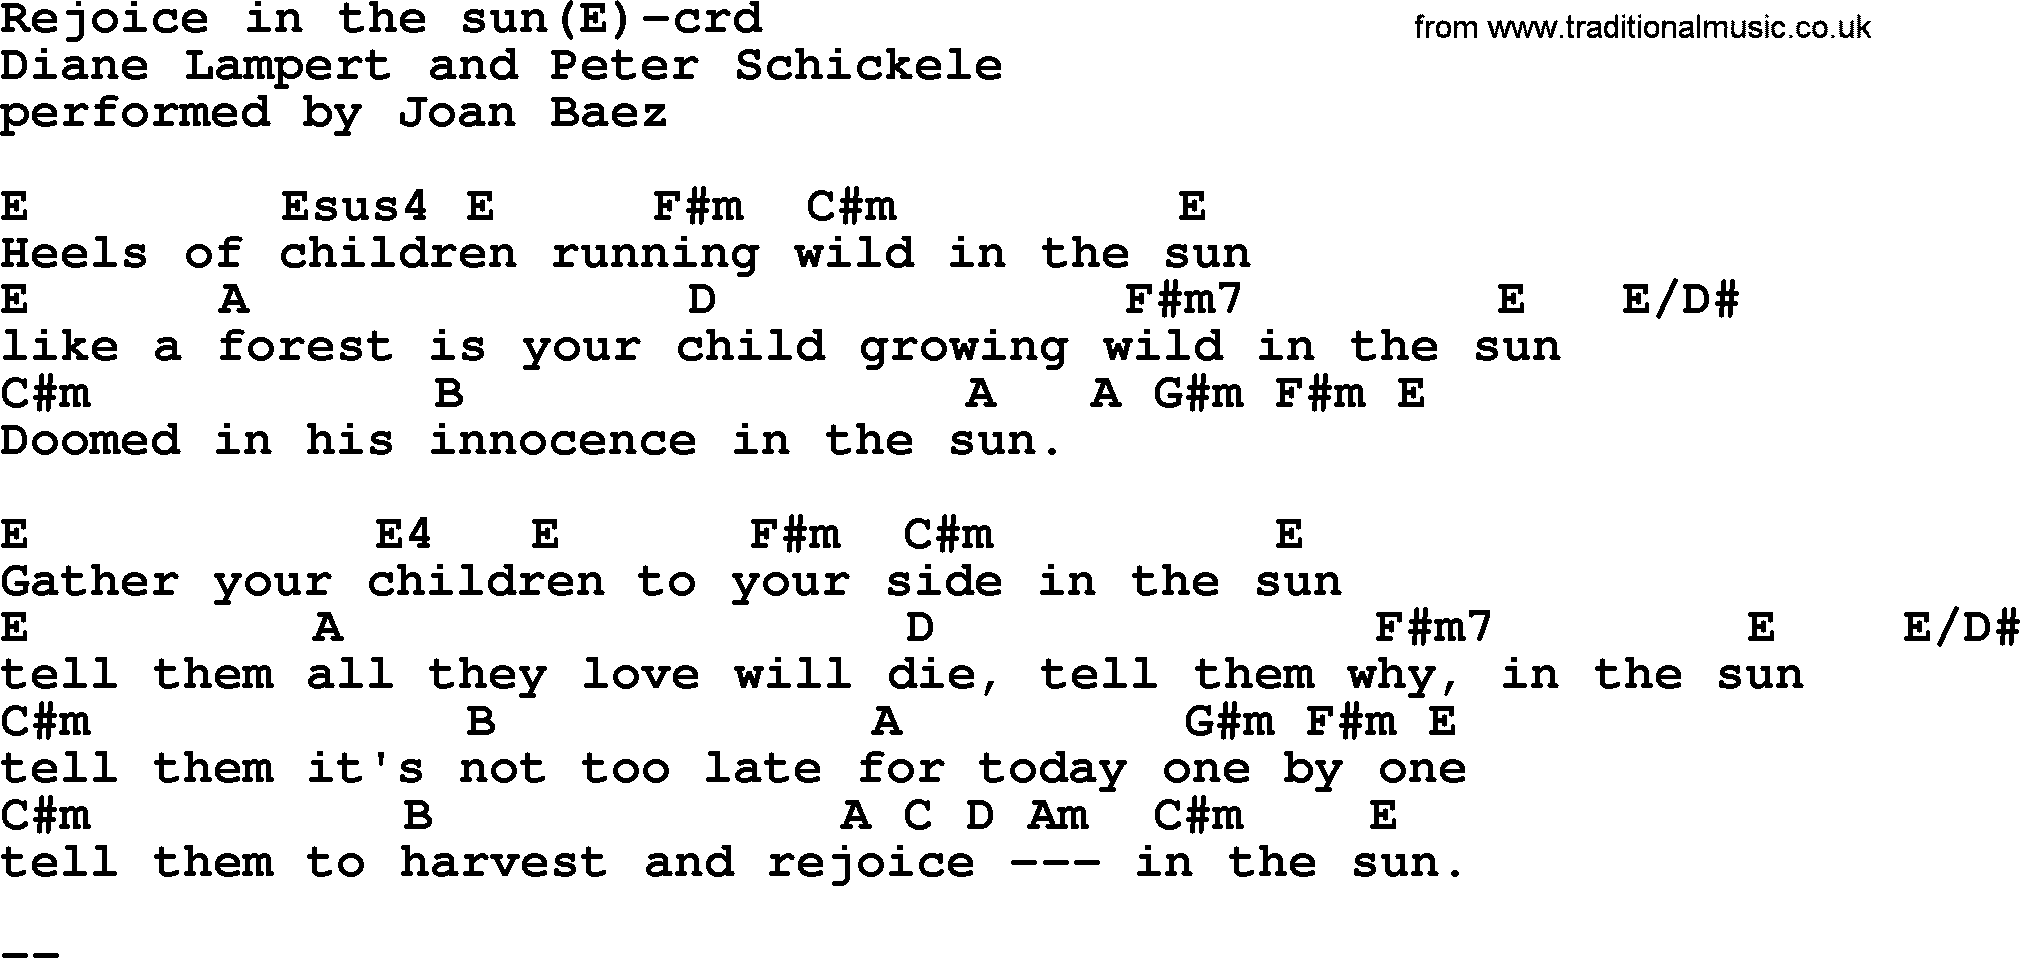 Joan Baez song Rejoice In The Sun(E) lyrics and chords